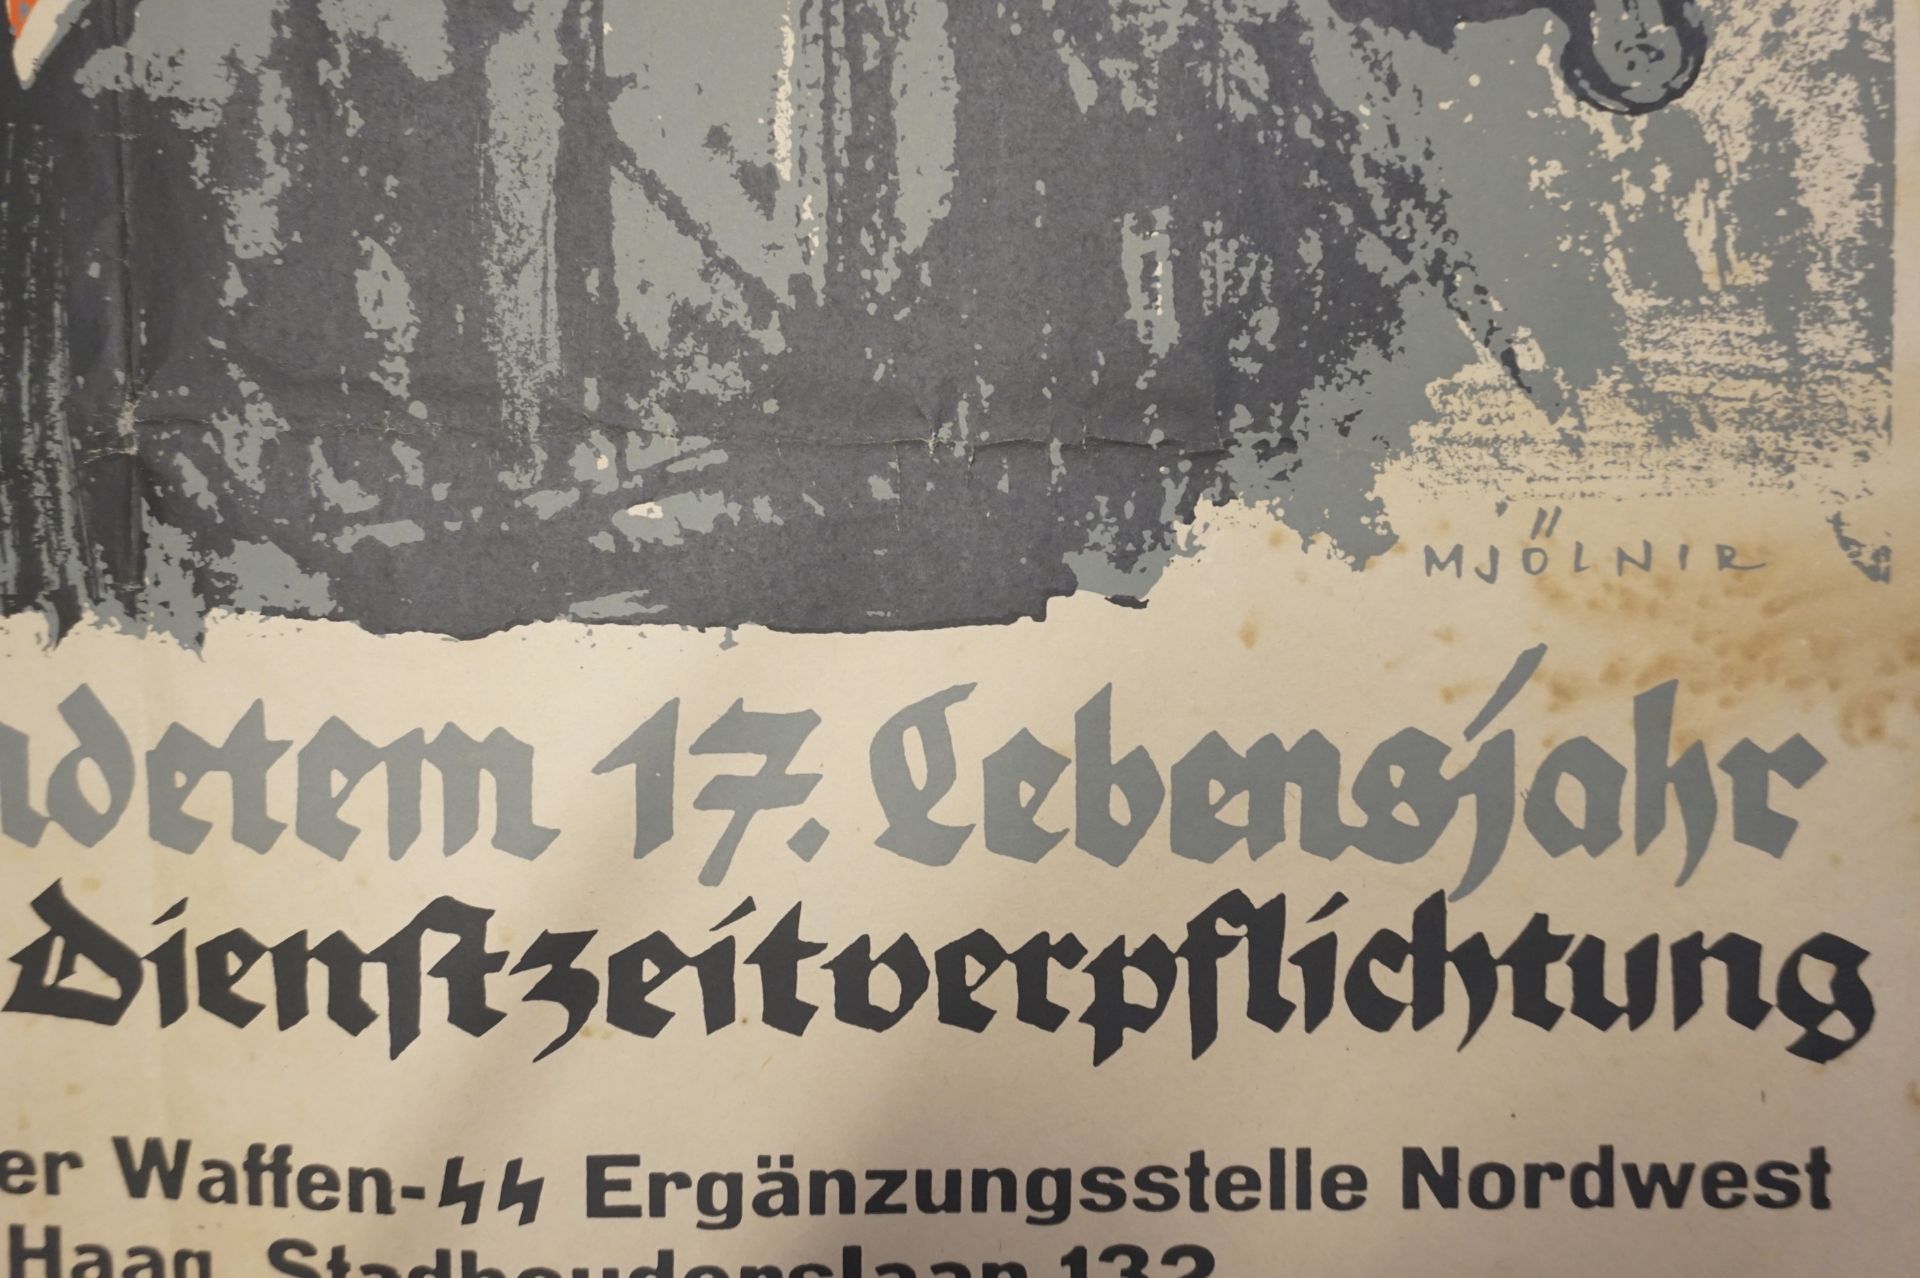 Affiches de la Waffen SS. Waffen SS poster.  - Image 2 of 5